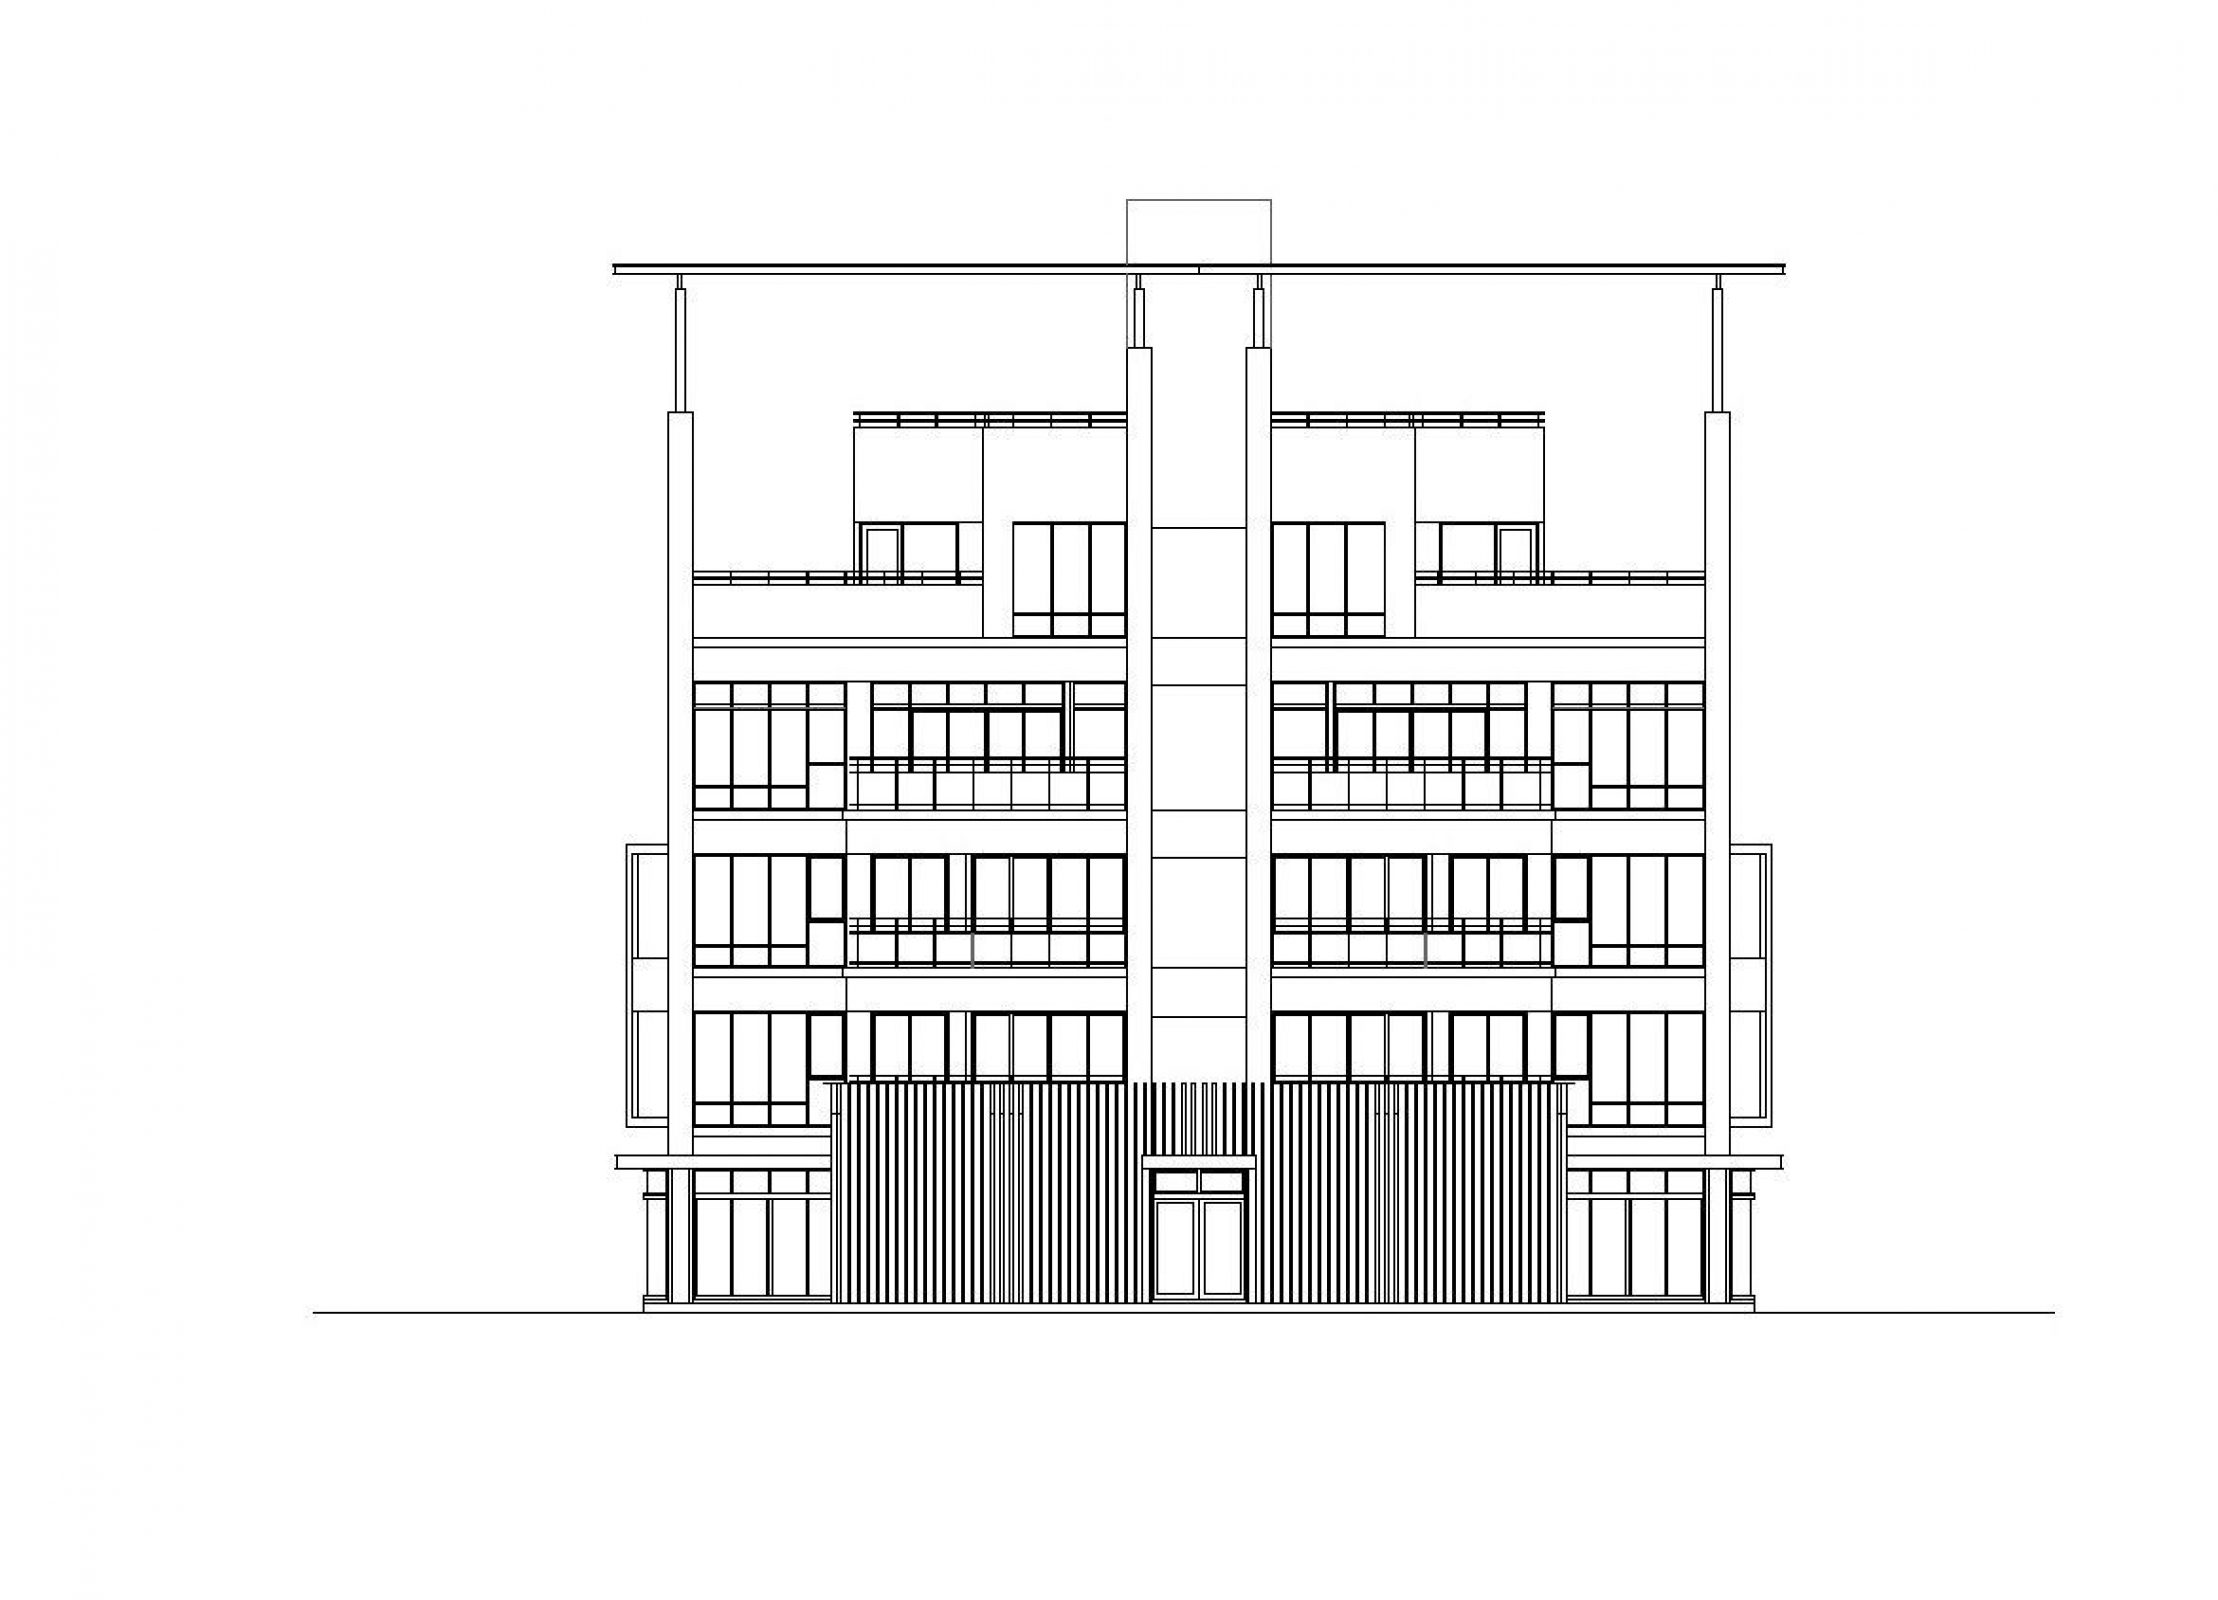 Ritz Plaza Housing Complex | Chin Architects - Arch2O.com